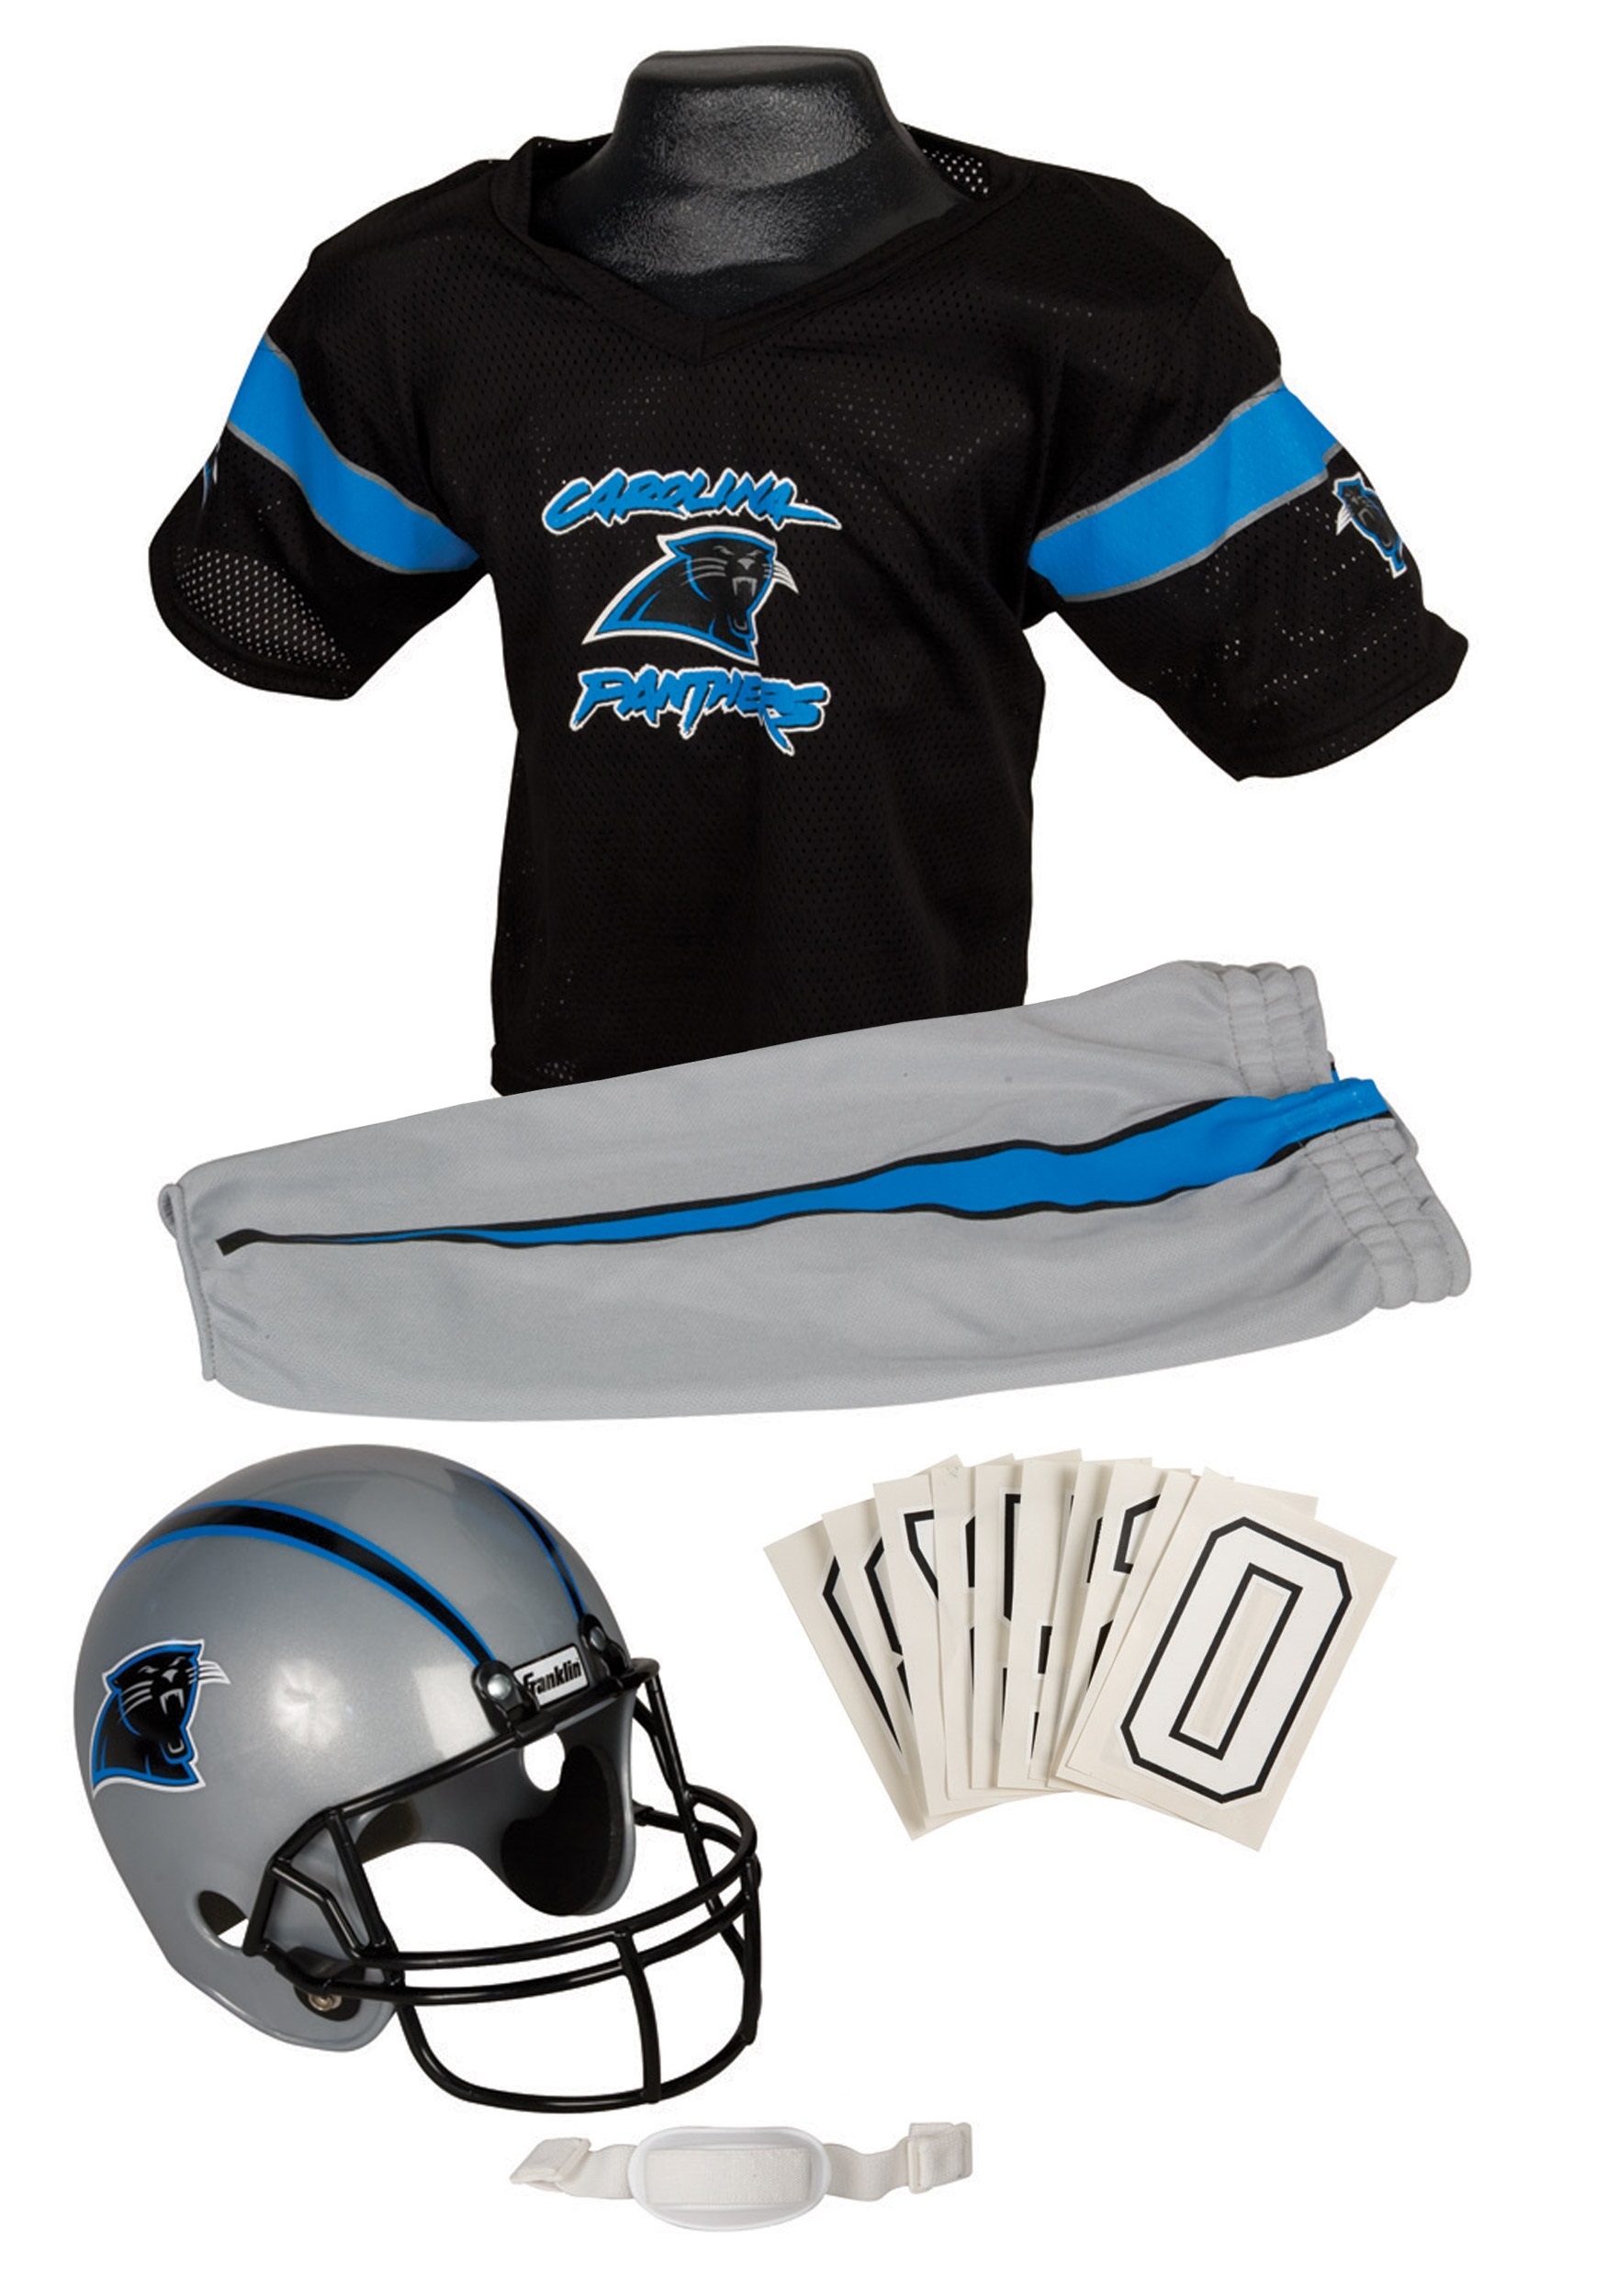 Carolina Panthers NFL Childrens Uniform Set